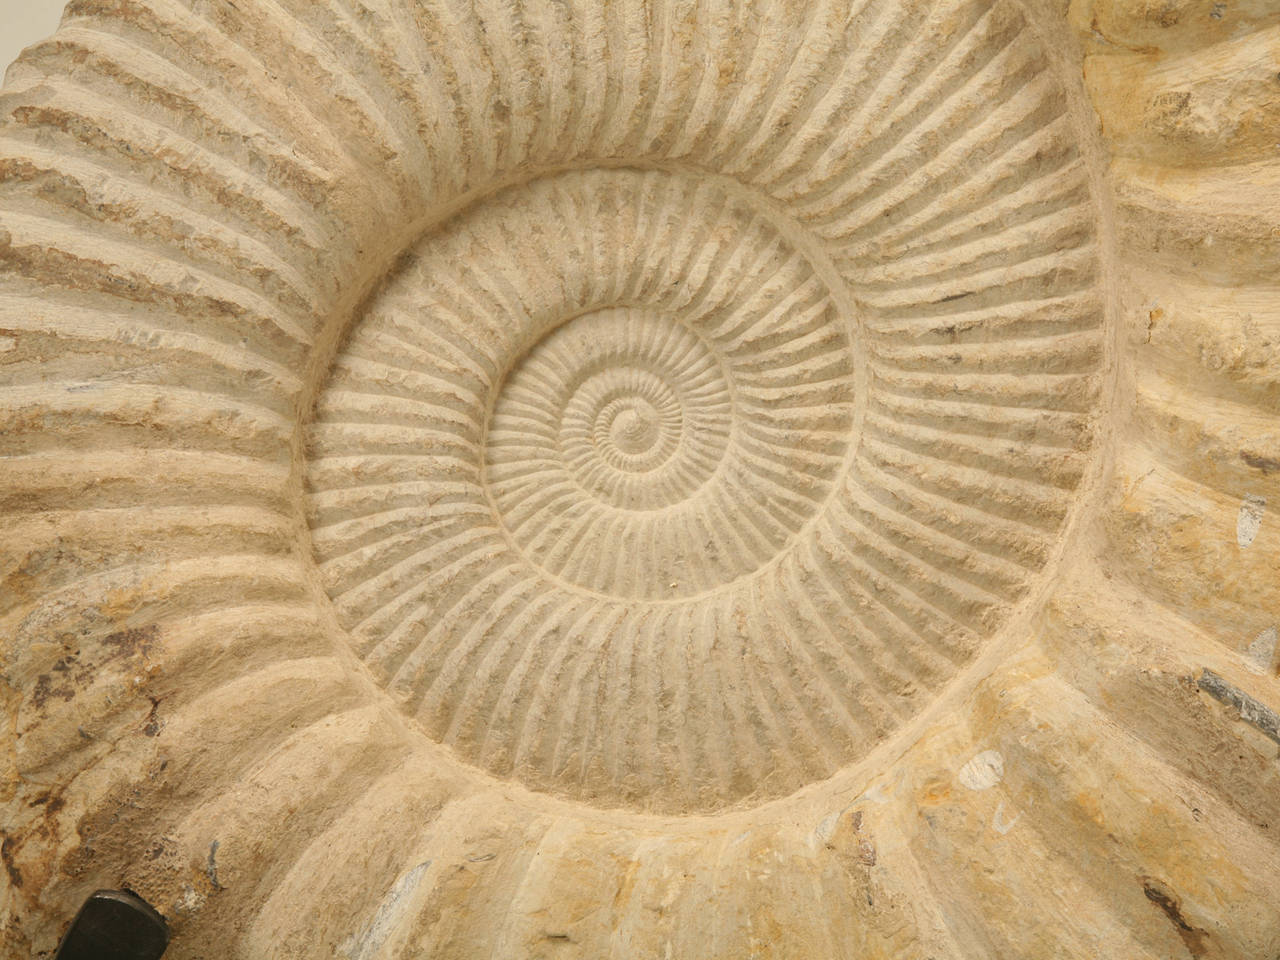 Moroccan Ammonite Fossil from Morocco